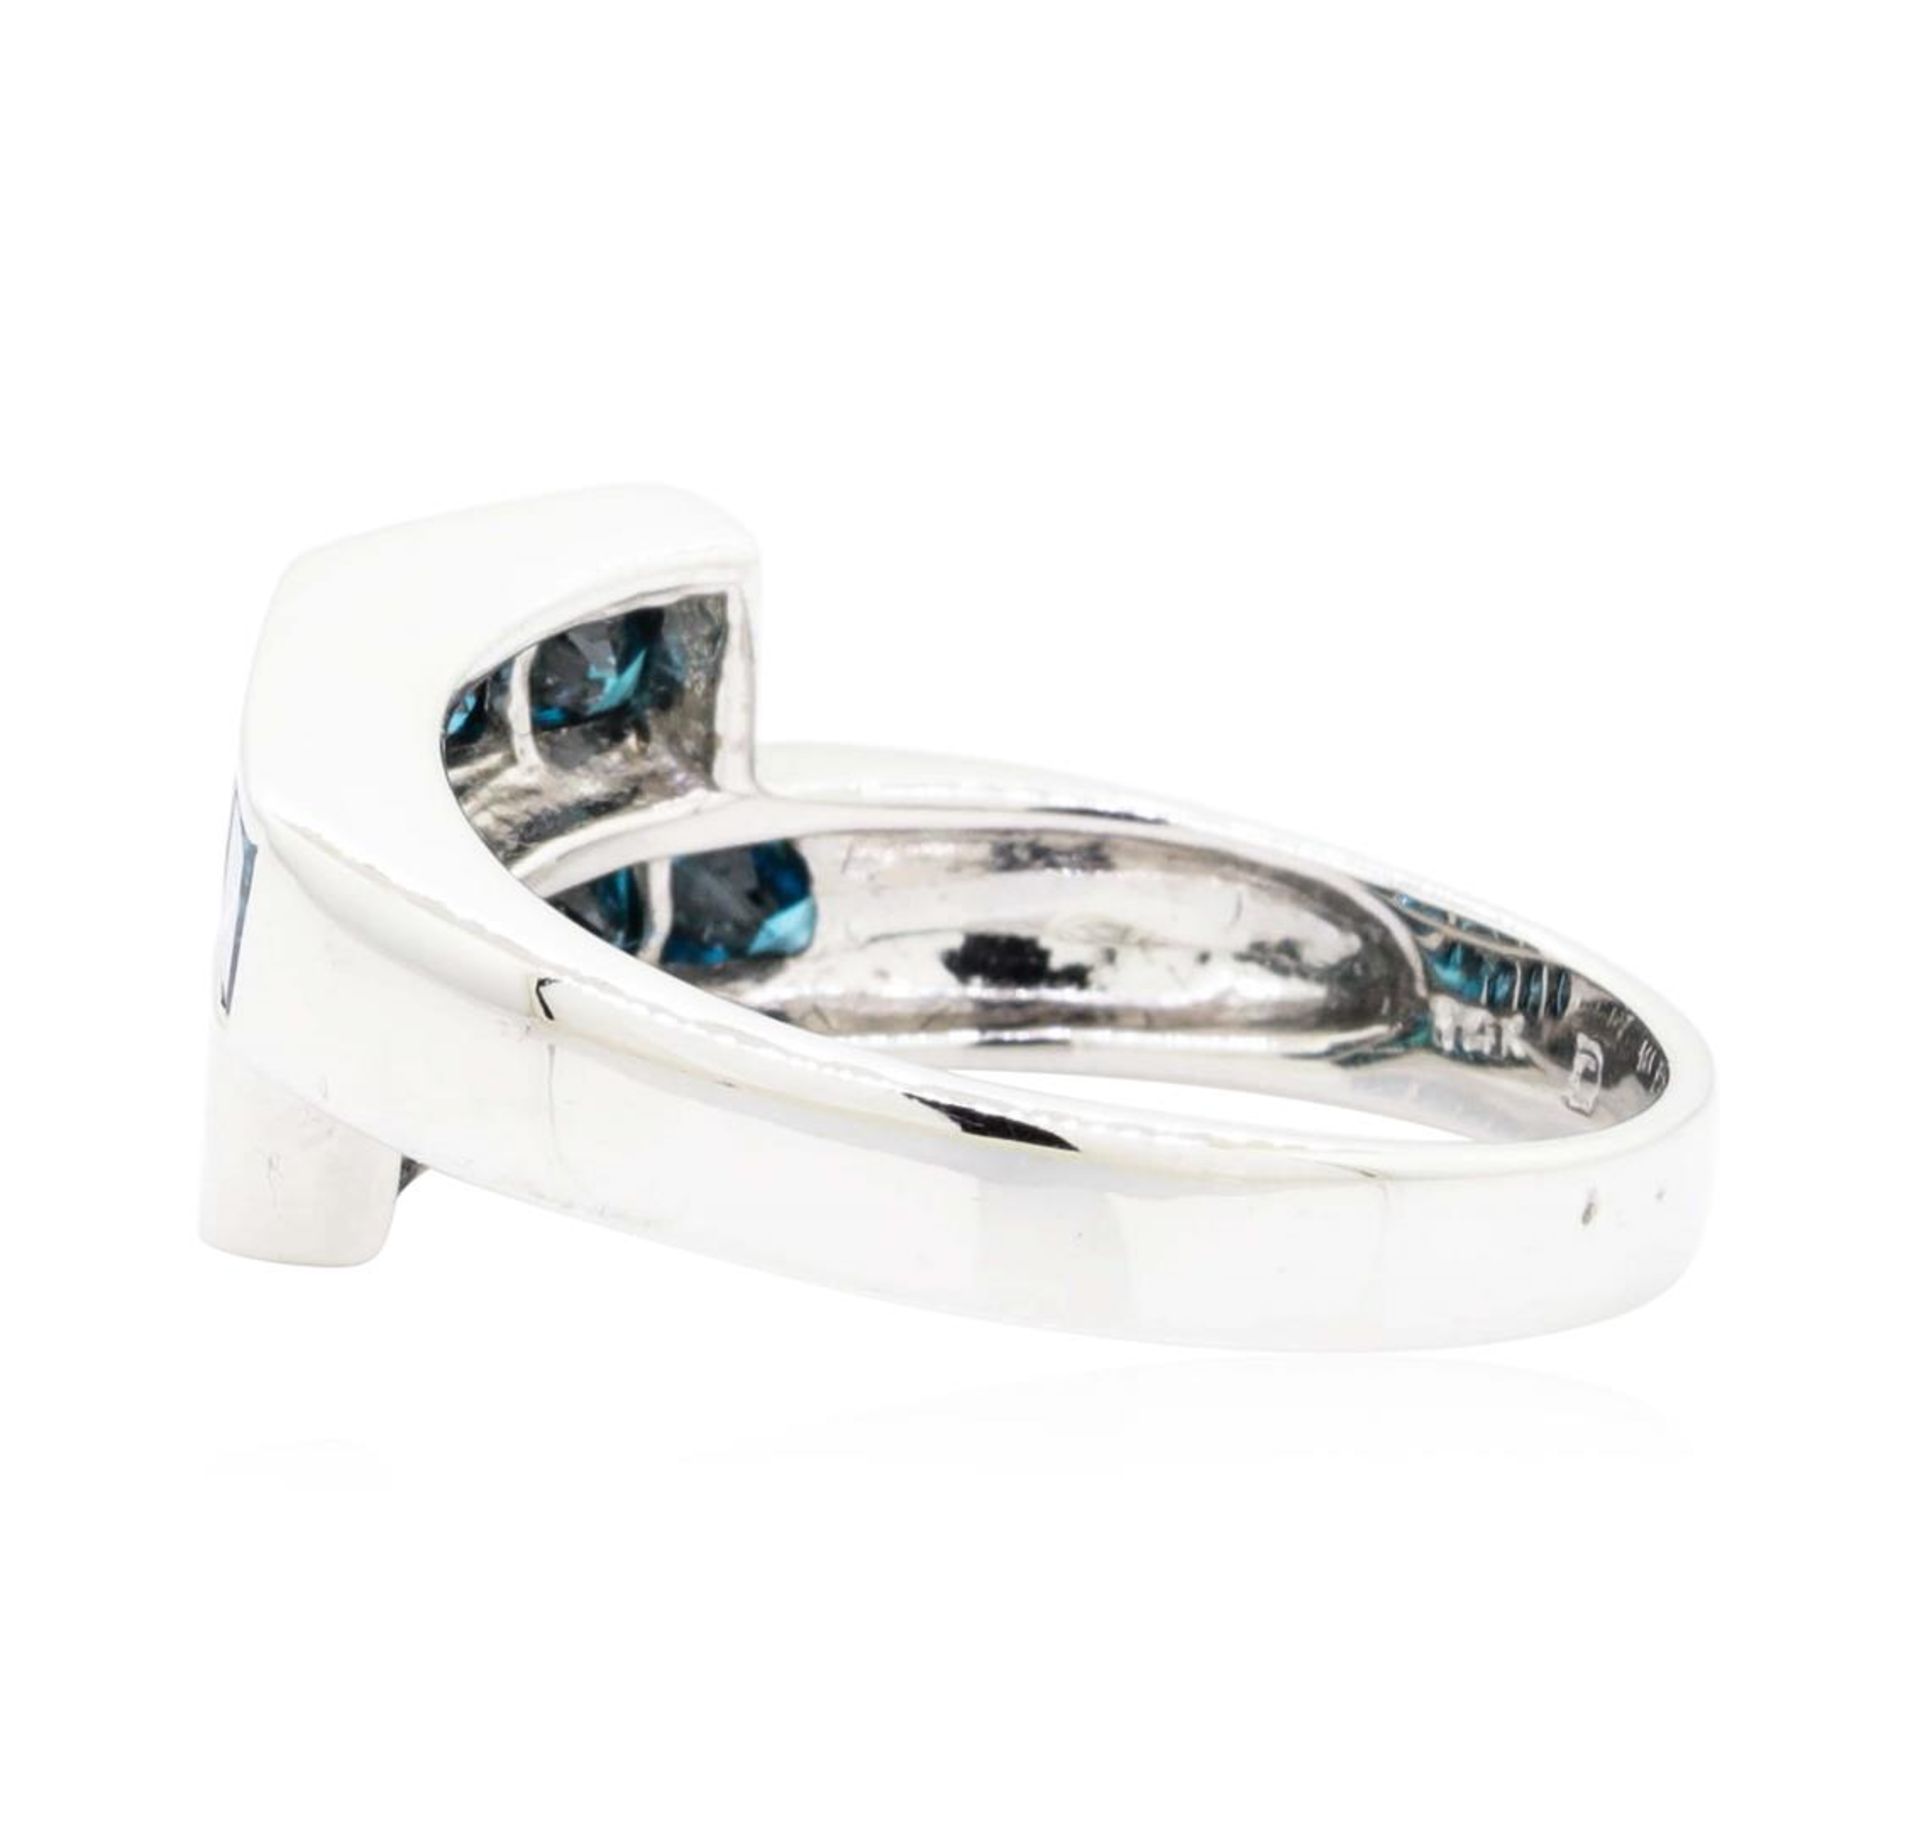 1.58 ctw Princess Cut Diamond Ring - 14KT White Gold - Image 3 of 5